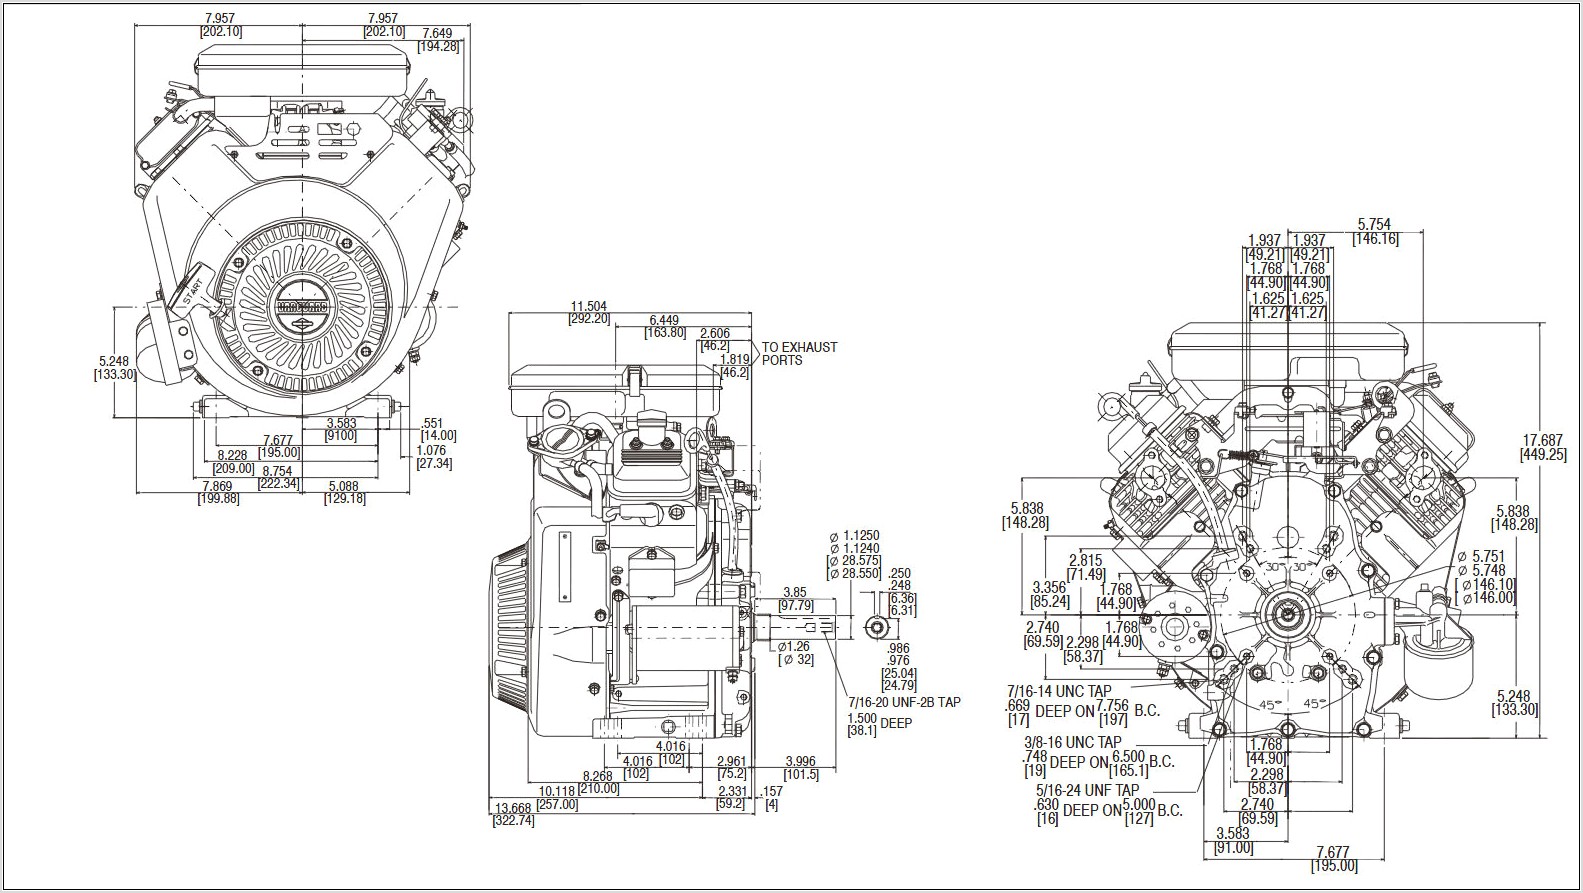 20 Hp Briggs And Stratton Engine Diagram